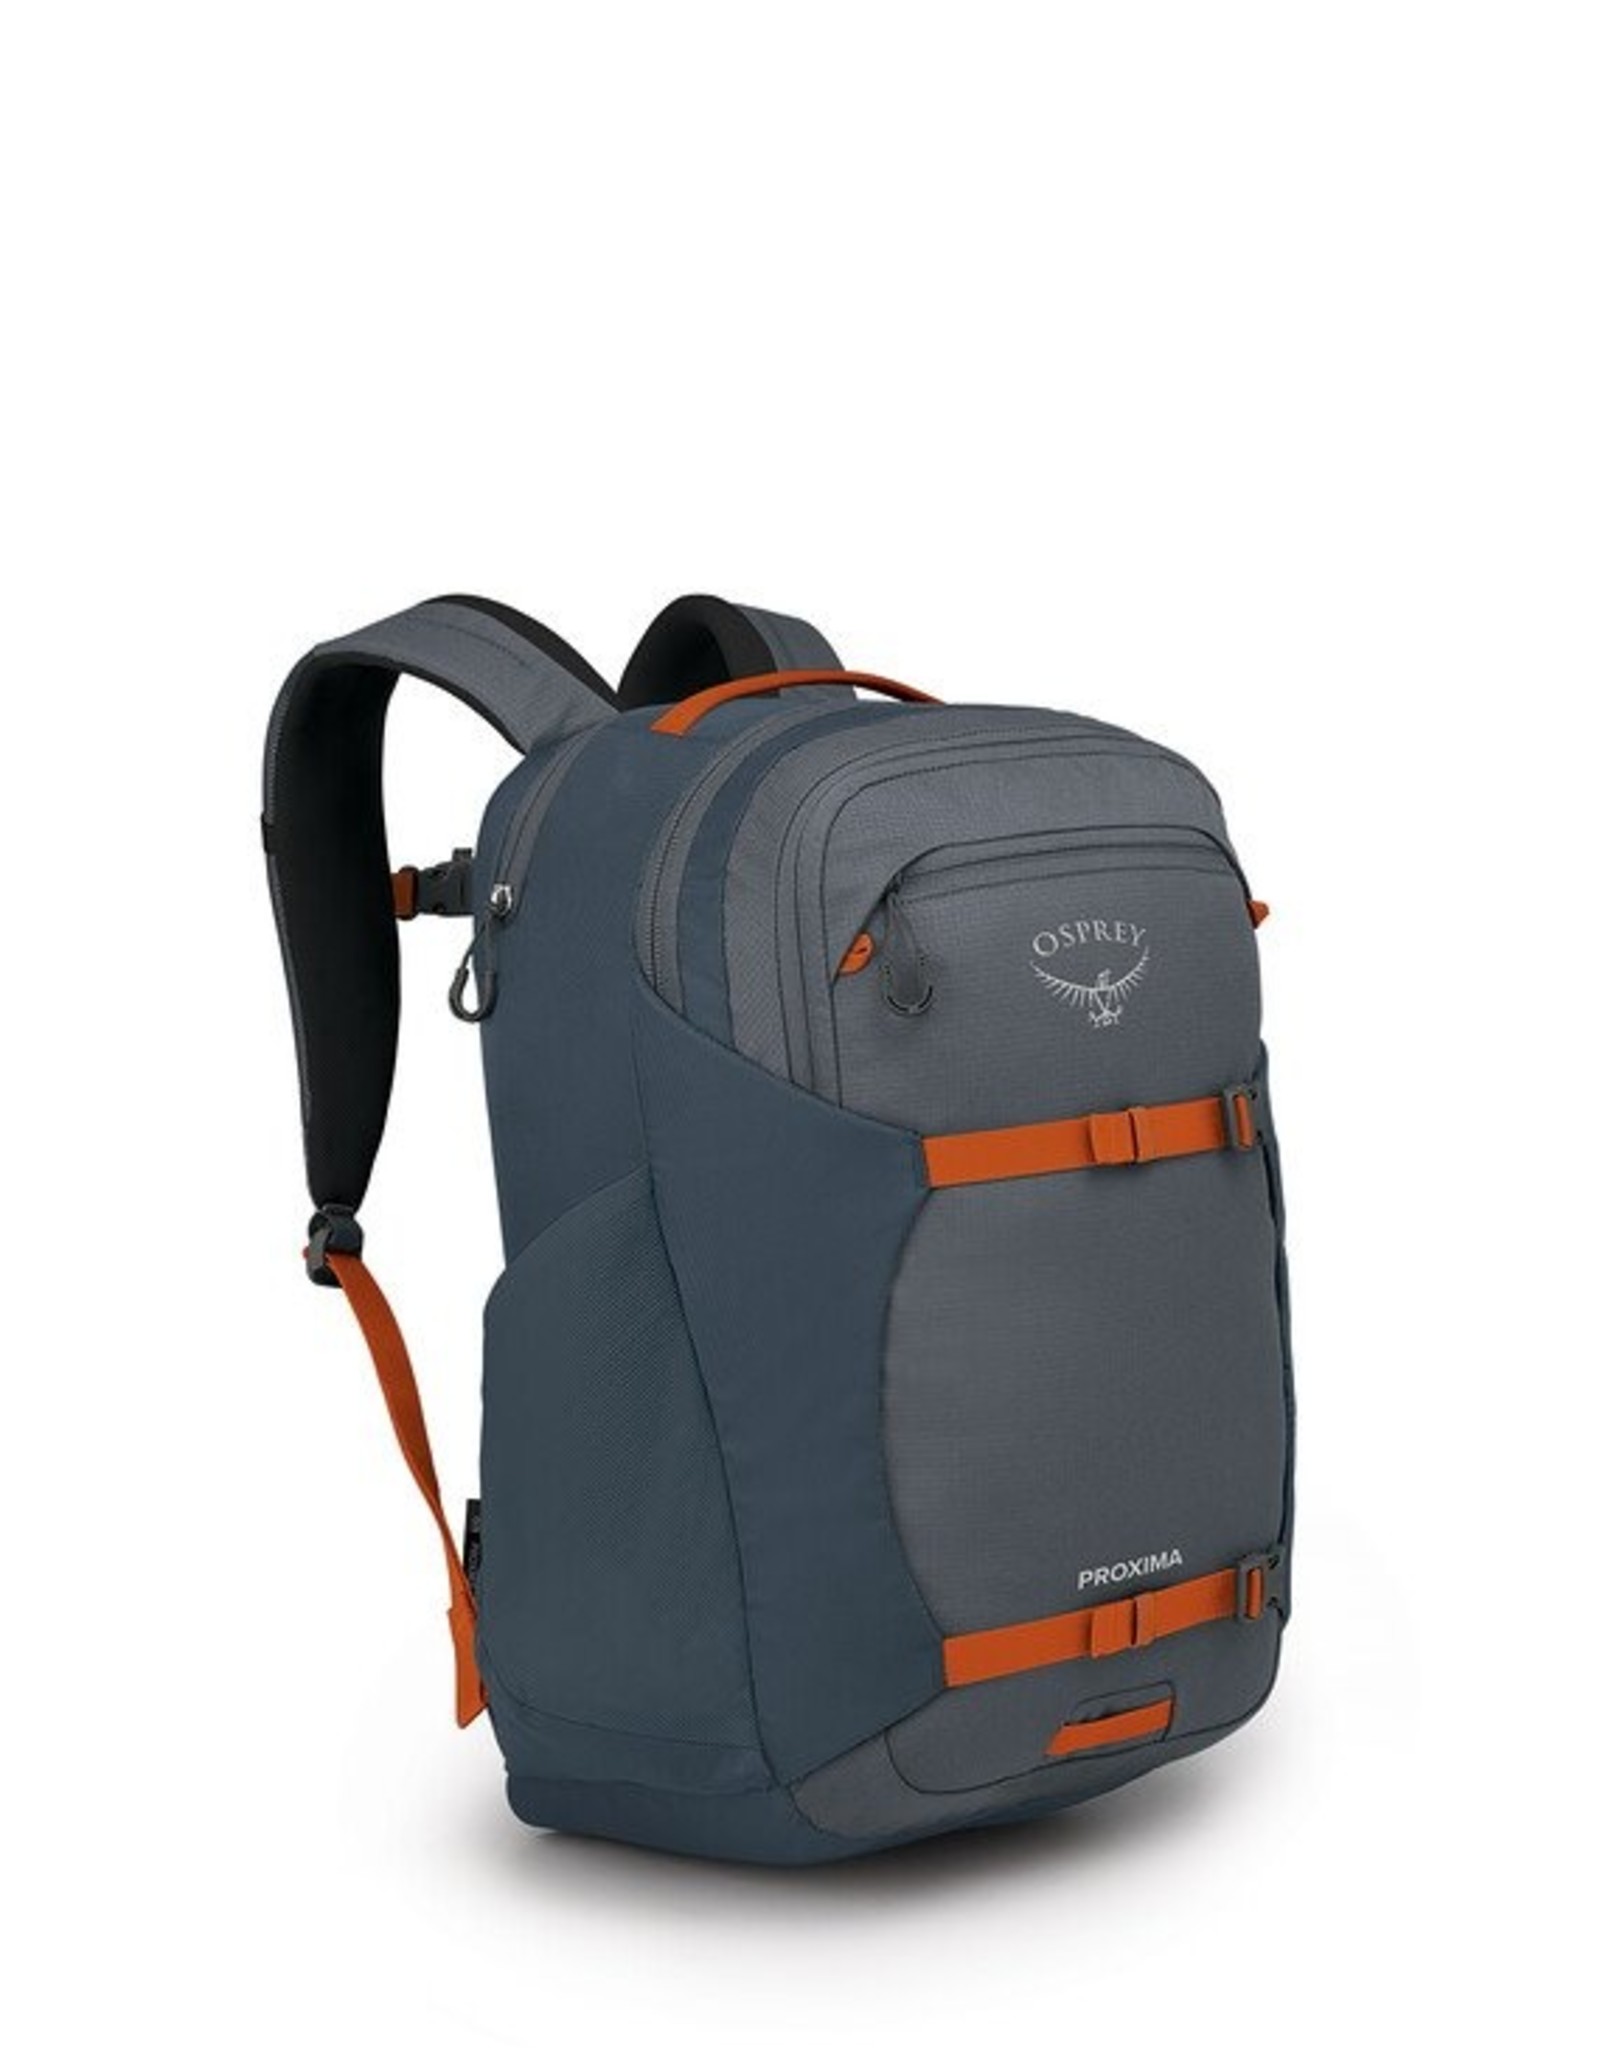 Osprey Osprey Proxima Backpack